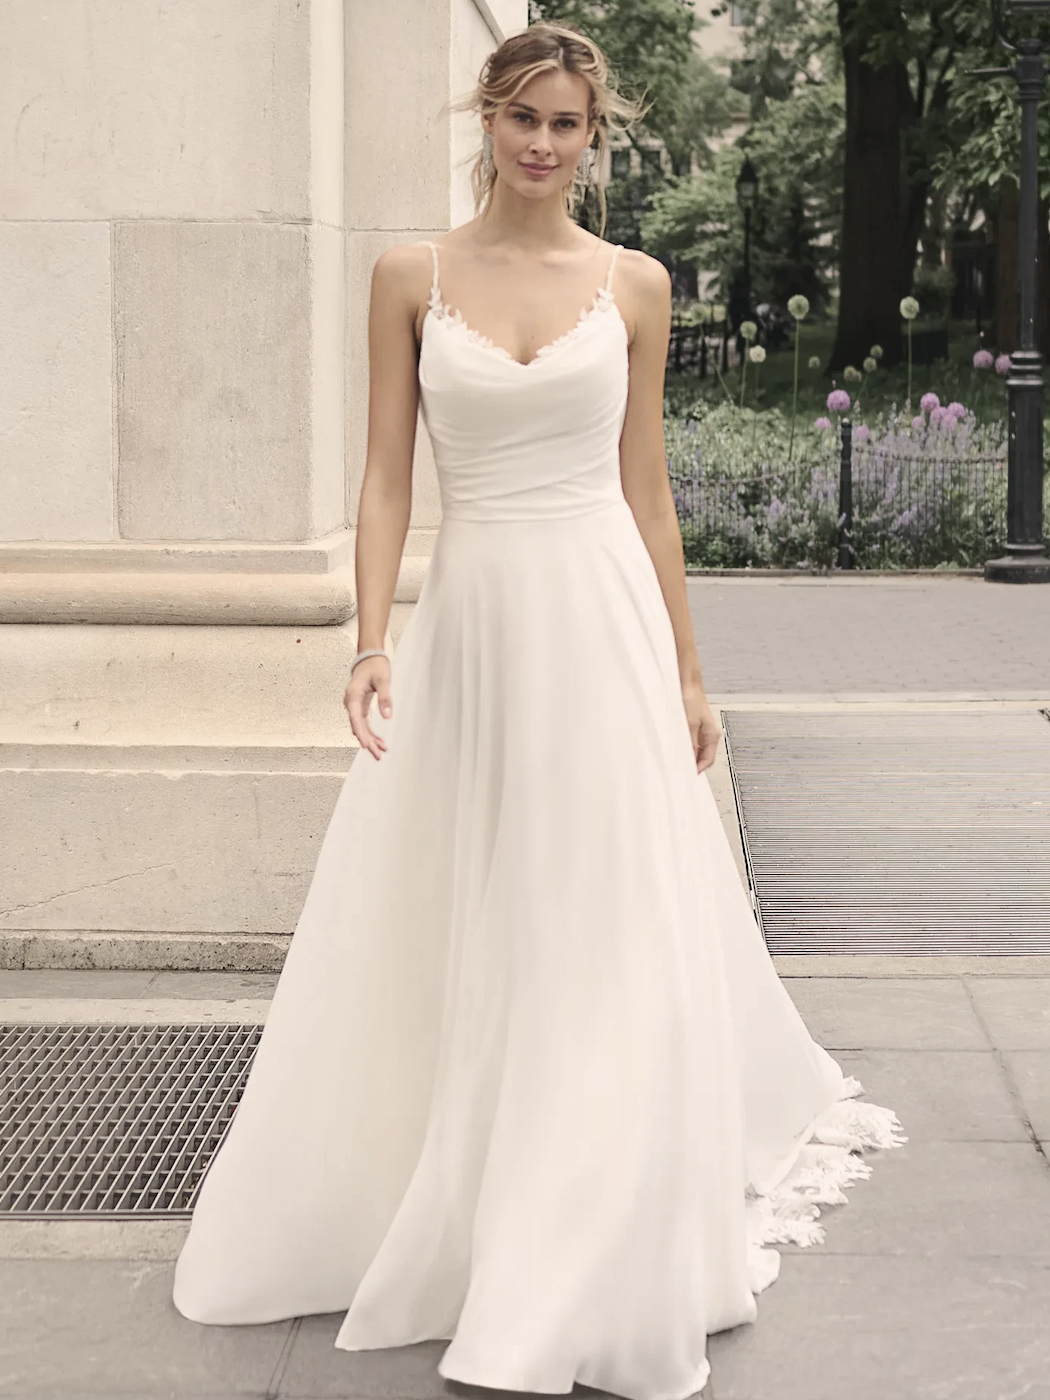 Model wearing Jessica wedding dress by Sottero & Midgley